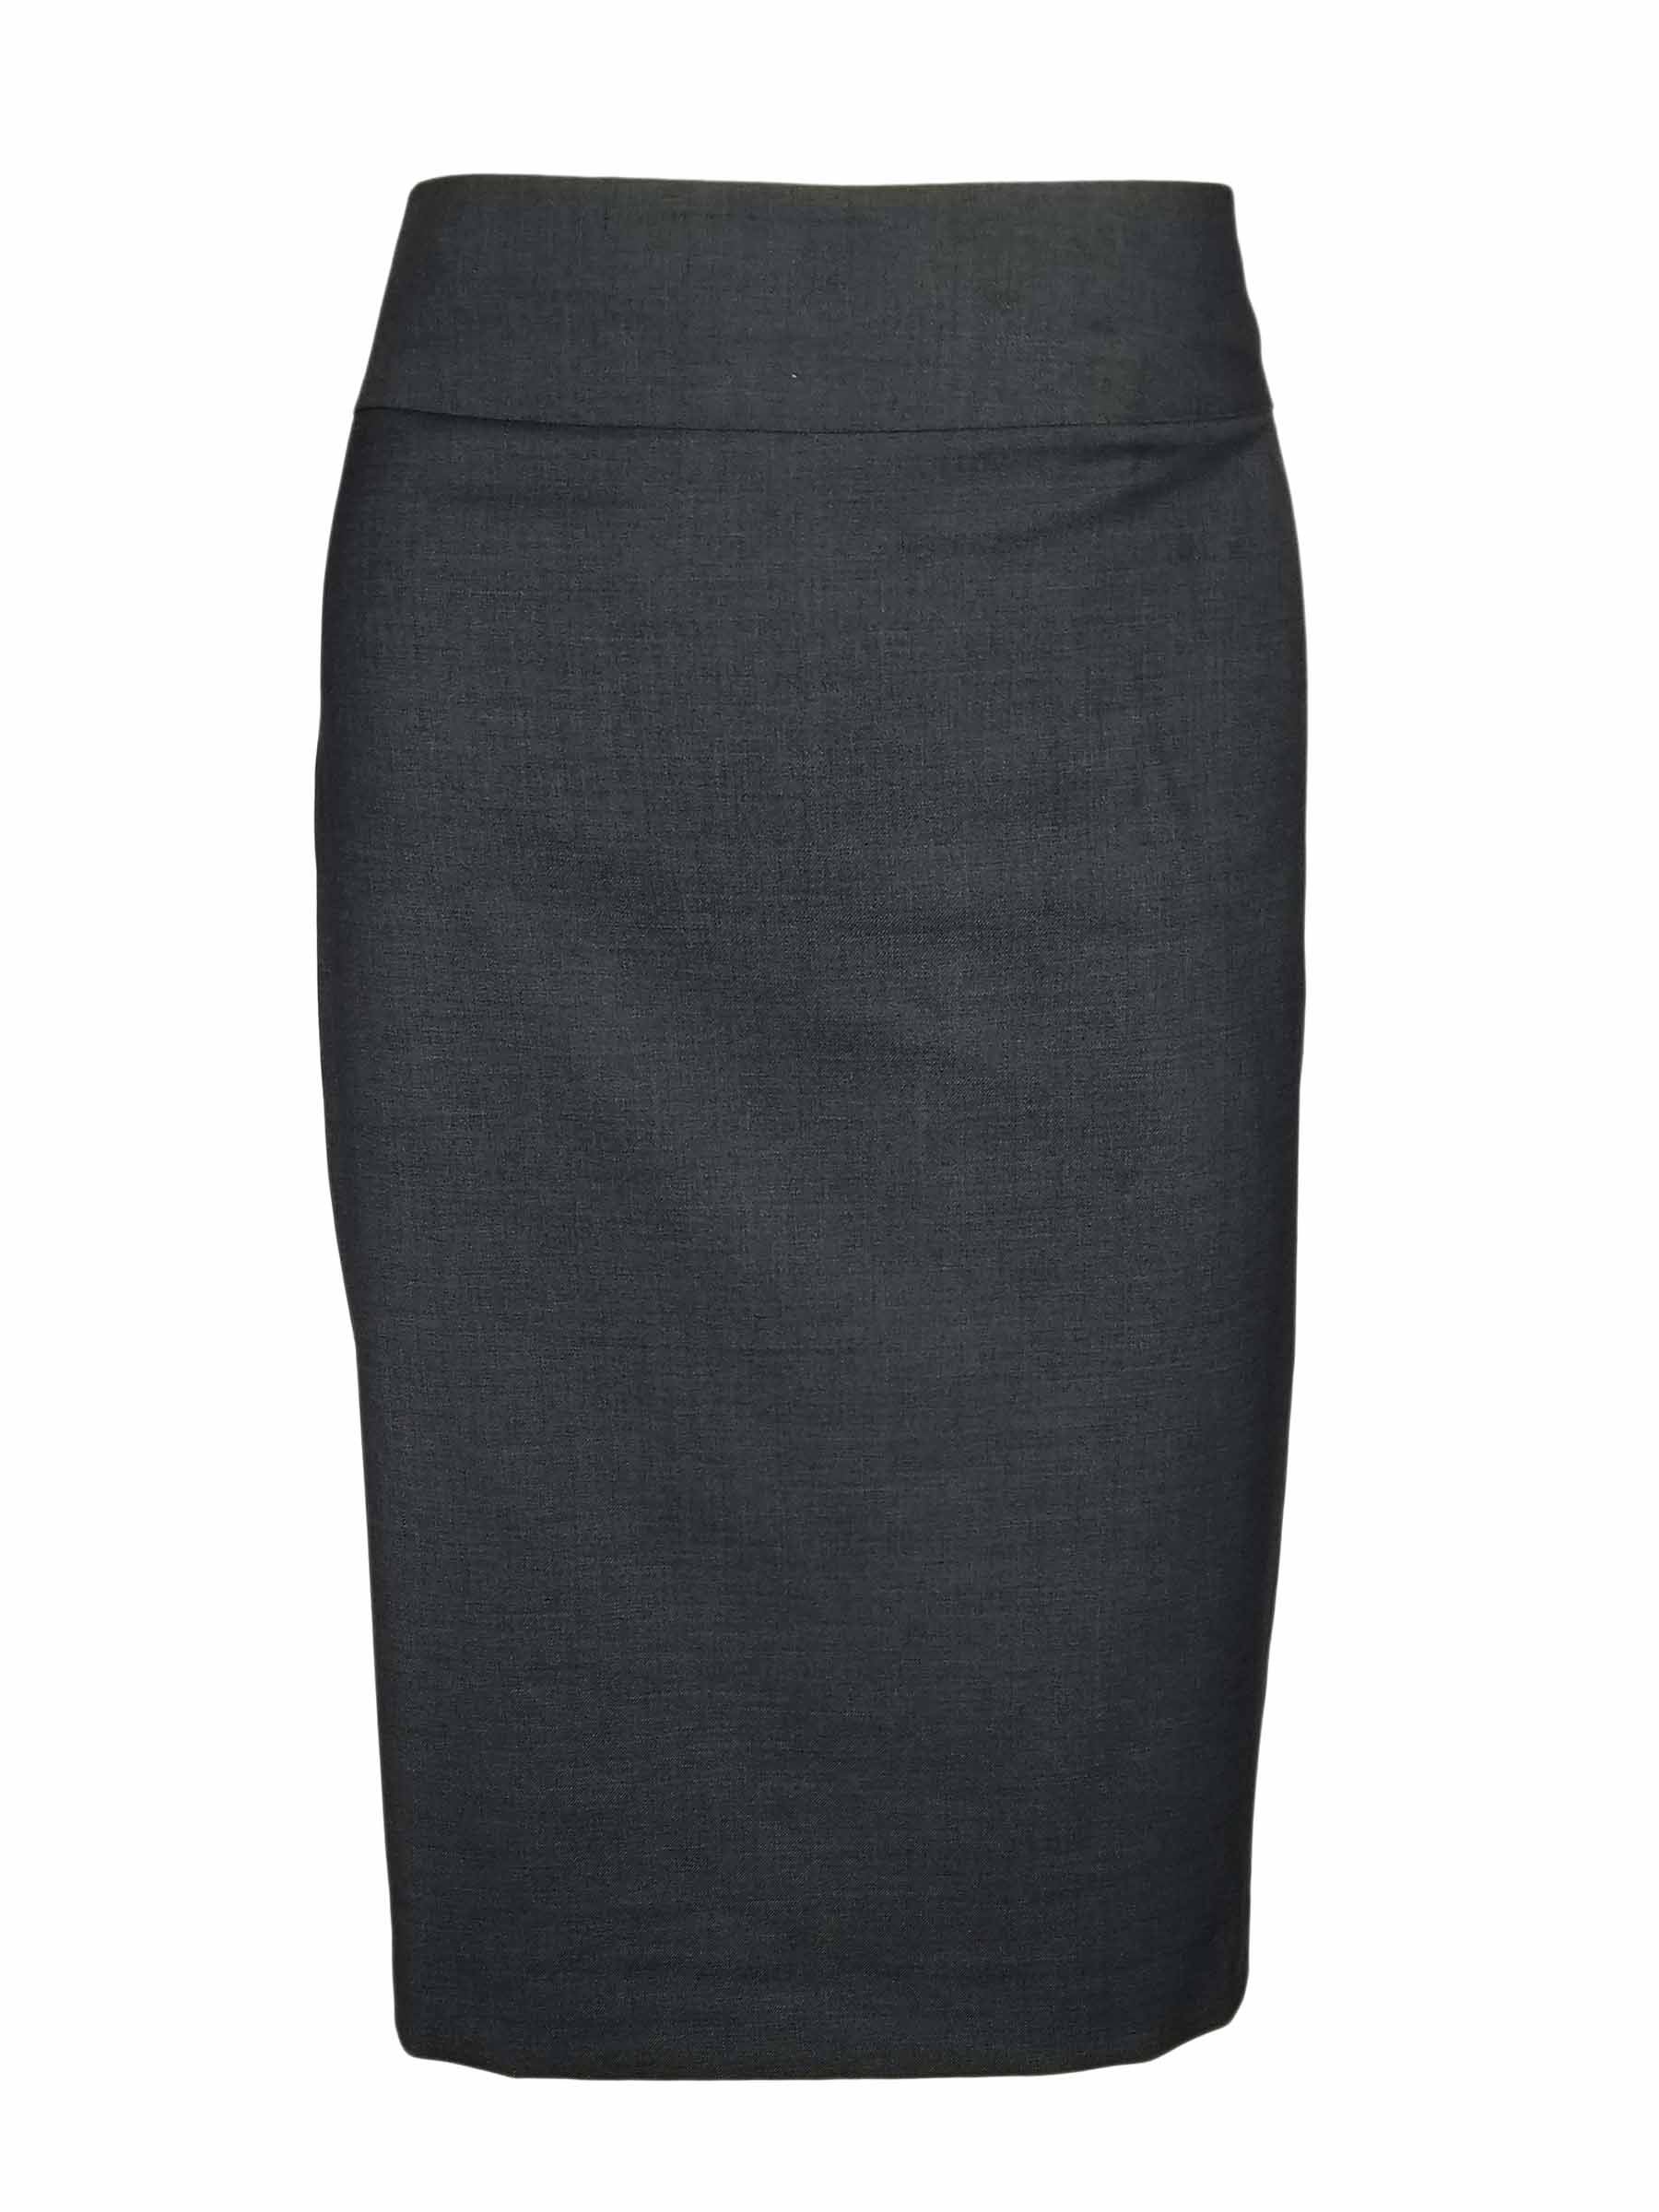 Straight Custom Skirt - Charcoal Wool Blend - Uniform Edit